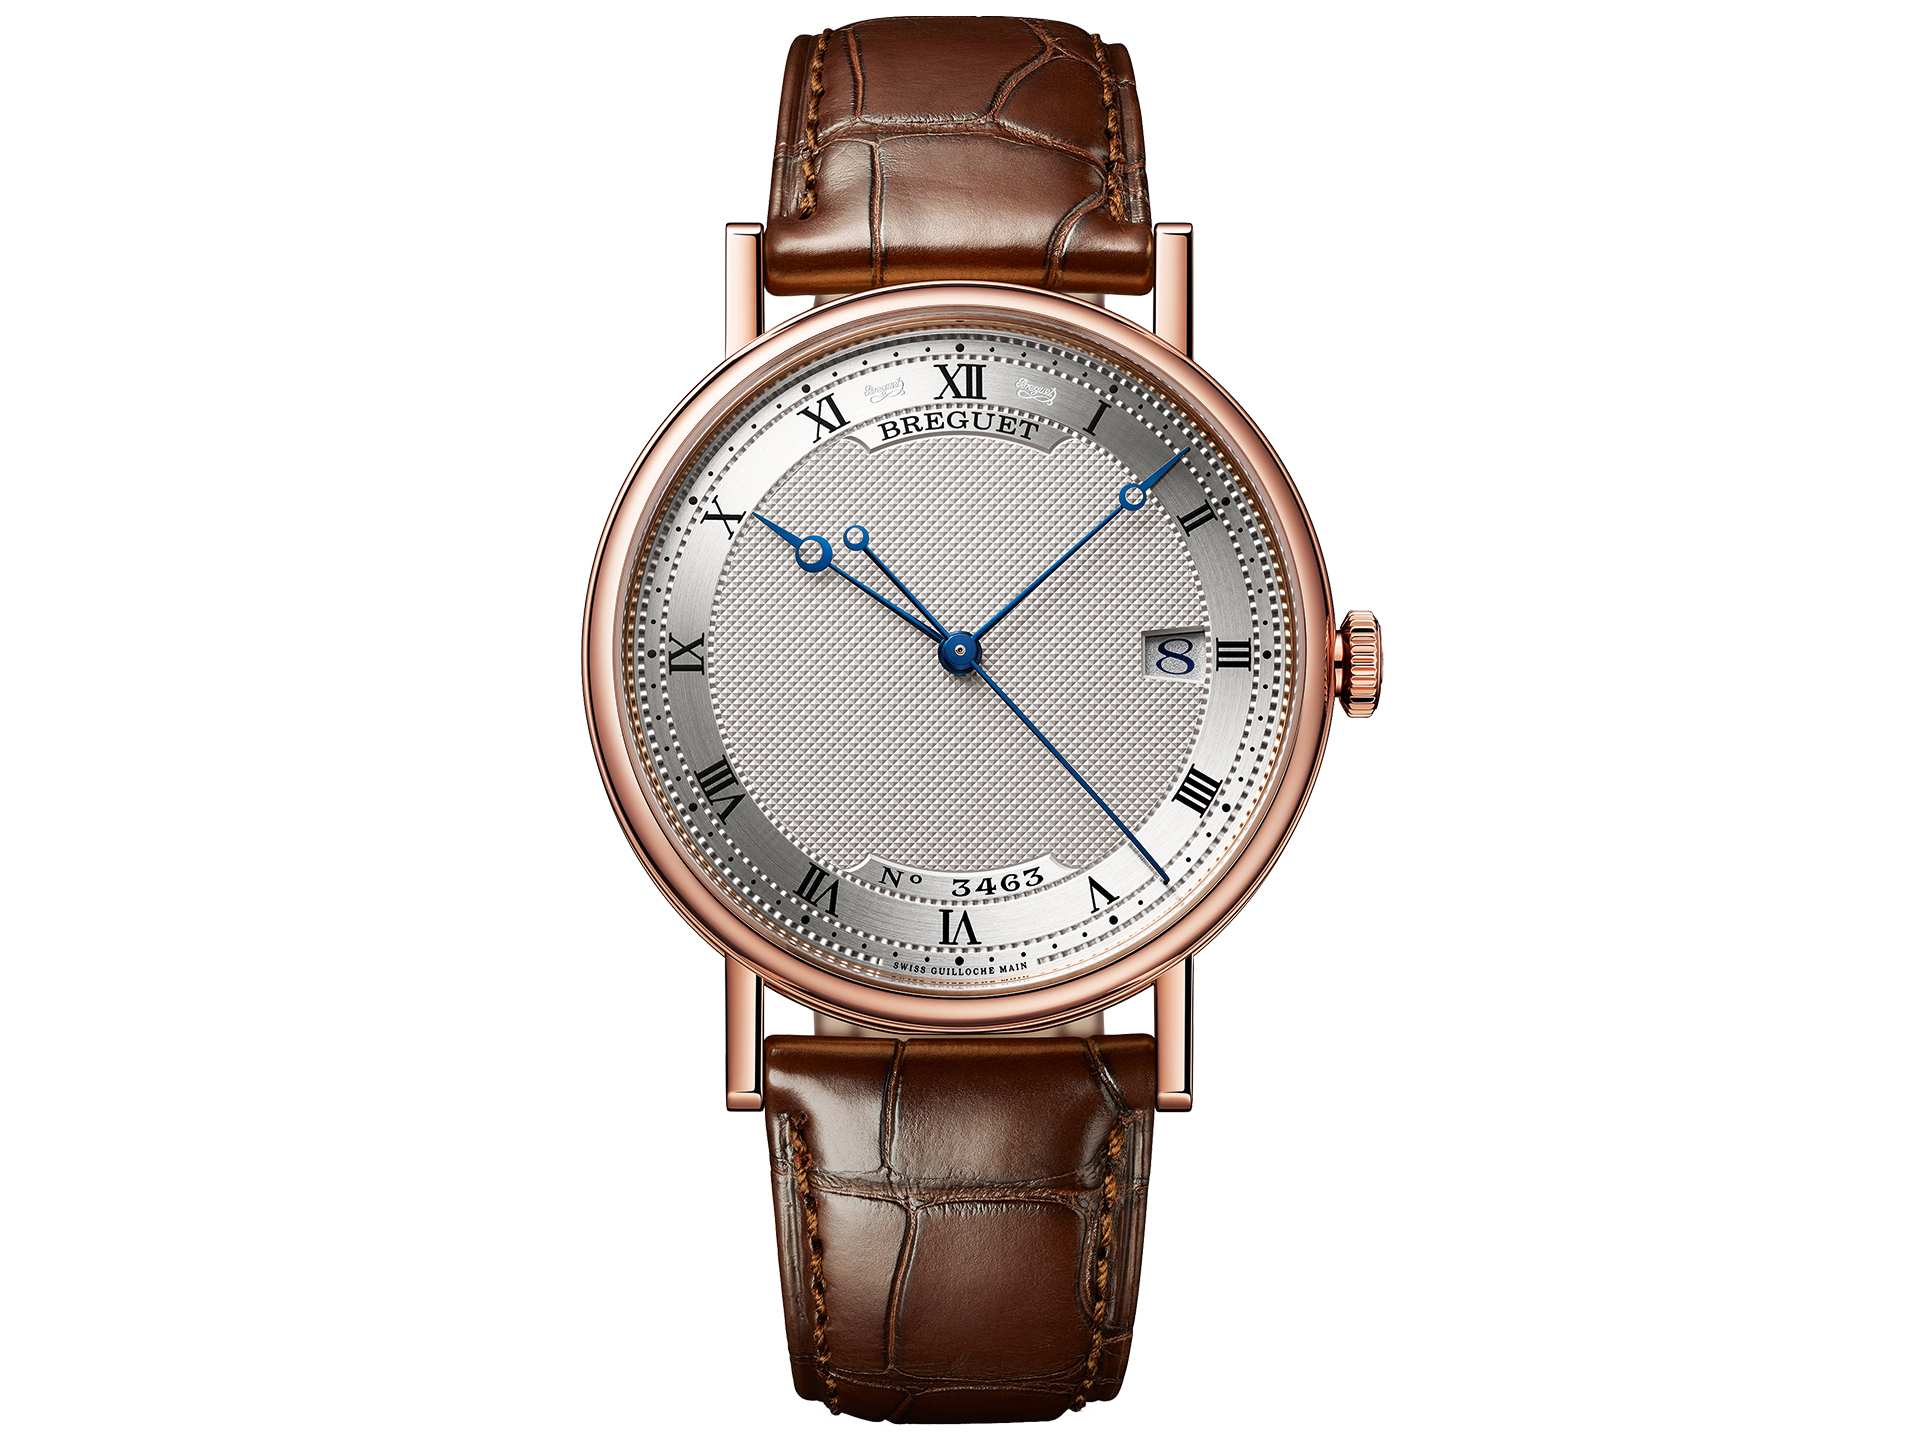 Breguet Classique 5177 BR 15 9V6 watch